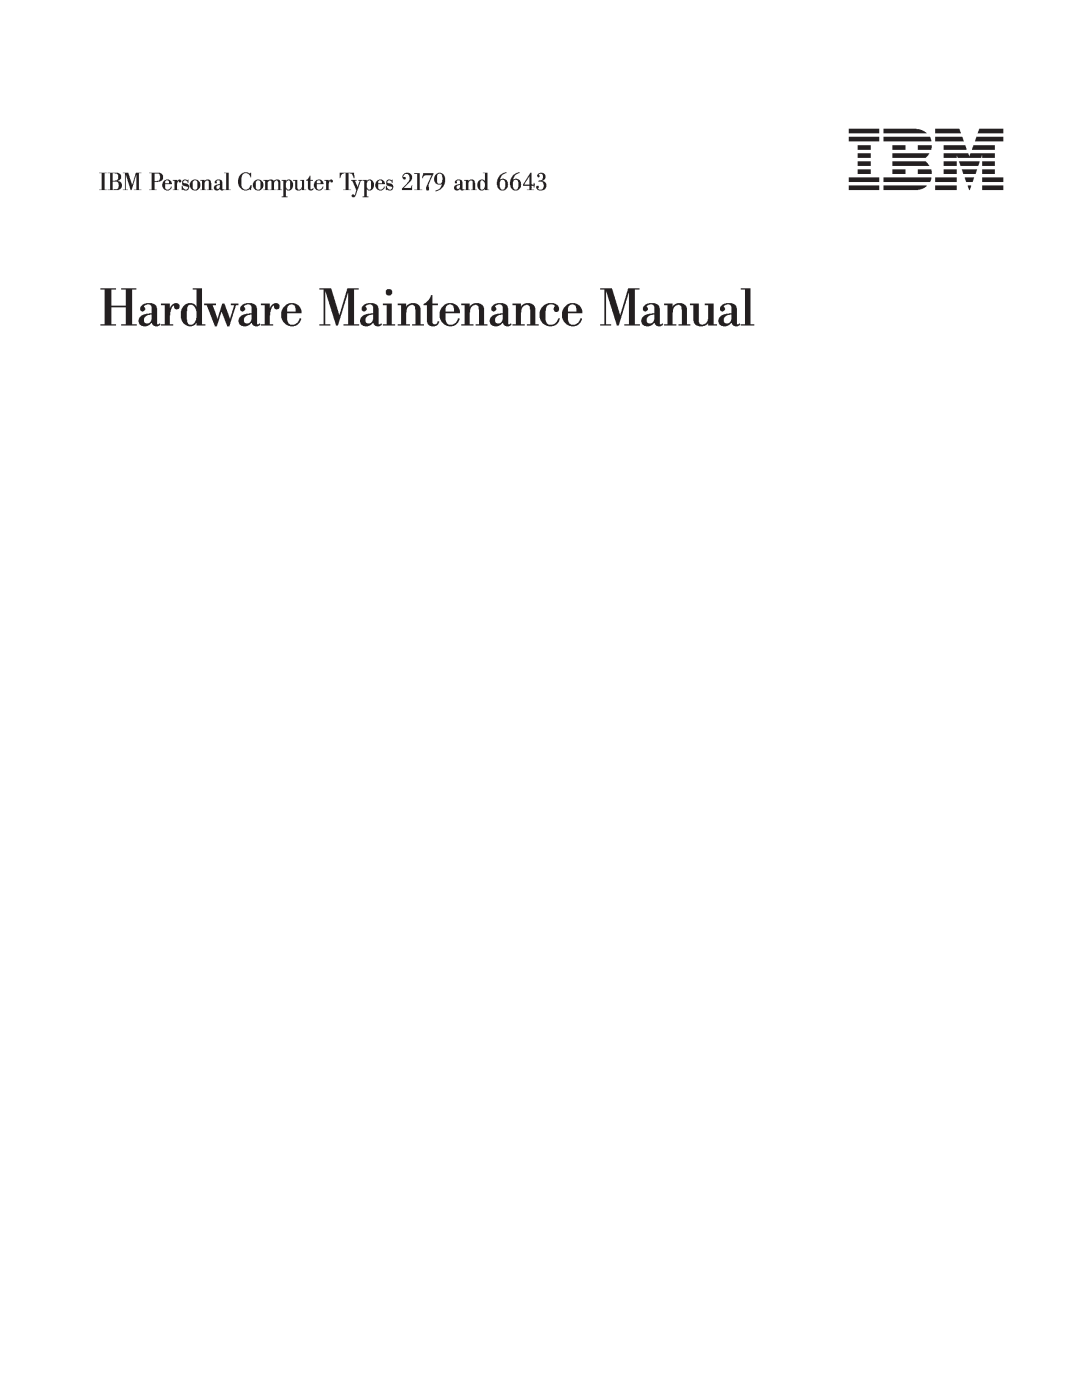 IBM 6643 manual Hardware Maintenance Manual, IBM Personal Computer Types 2179 and 